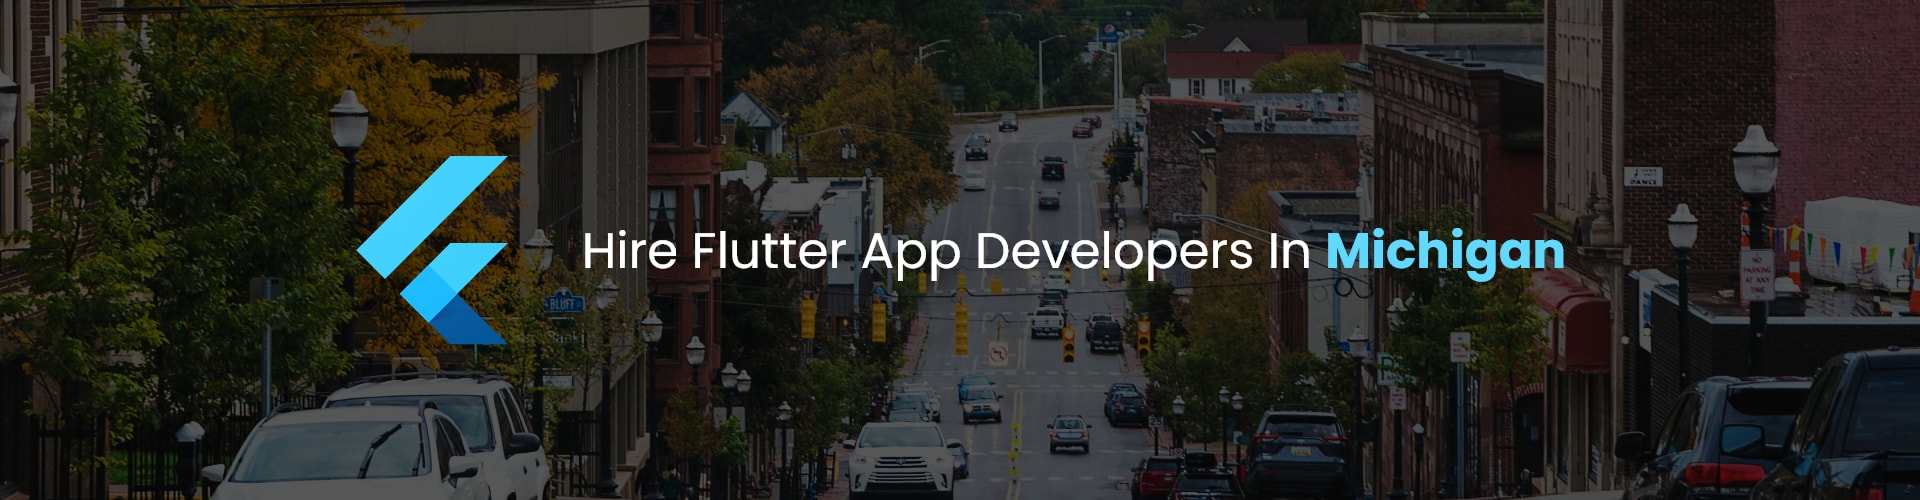 flutter app developers in michigan